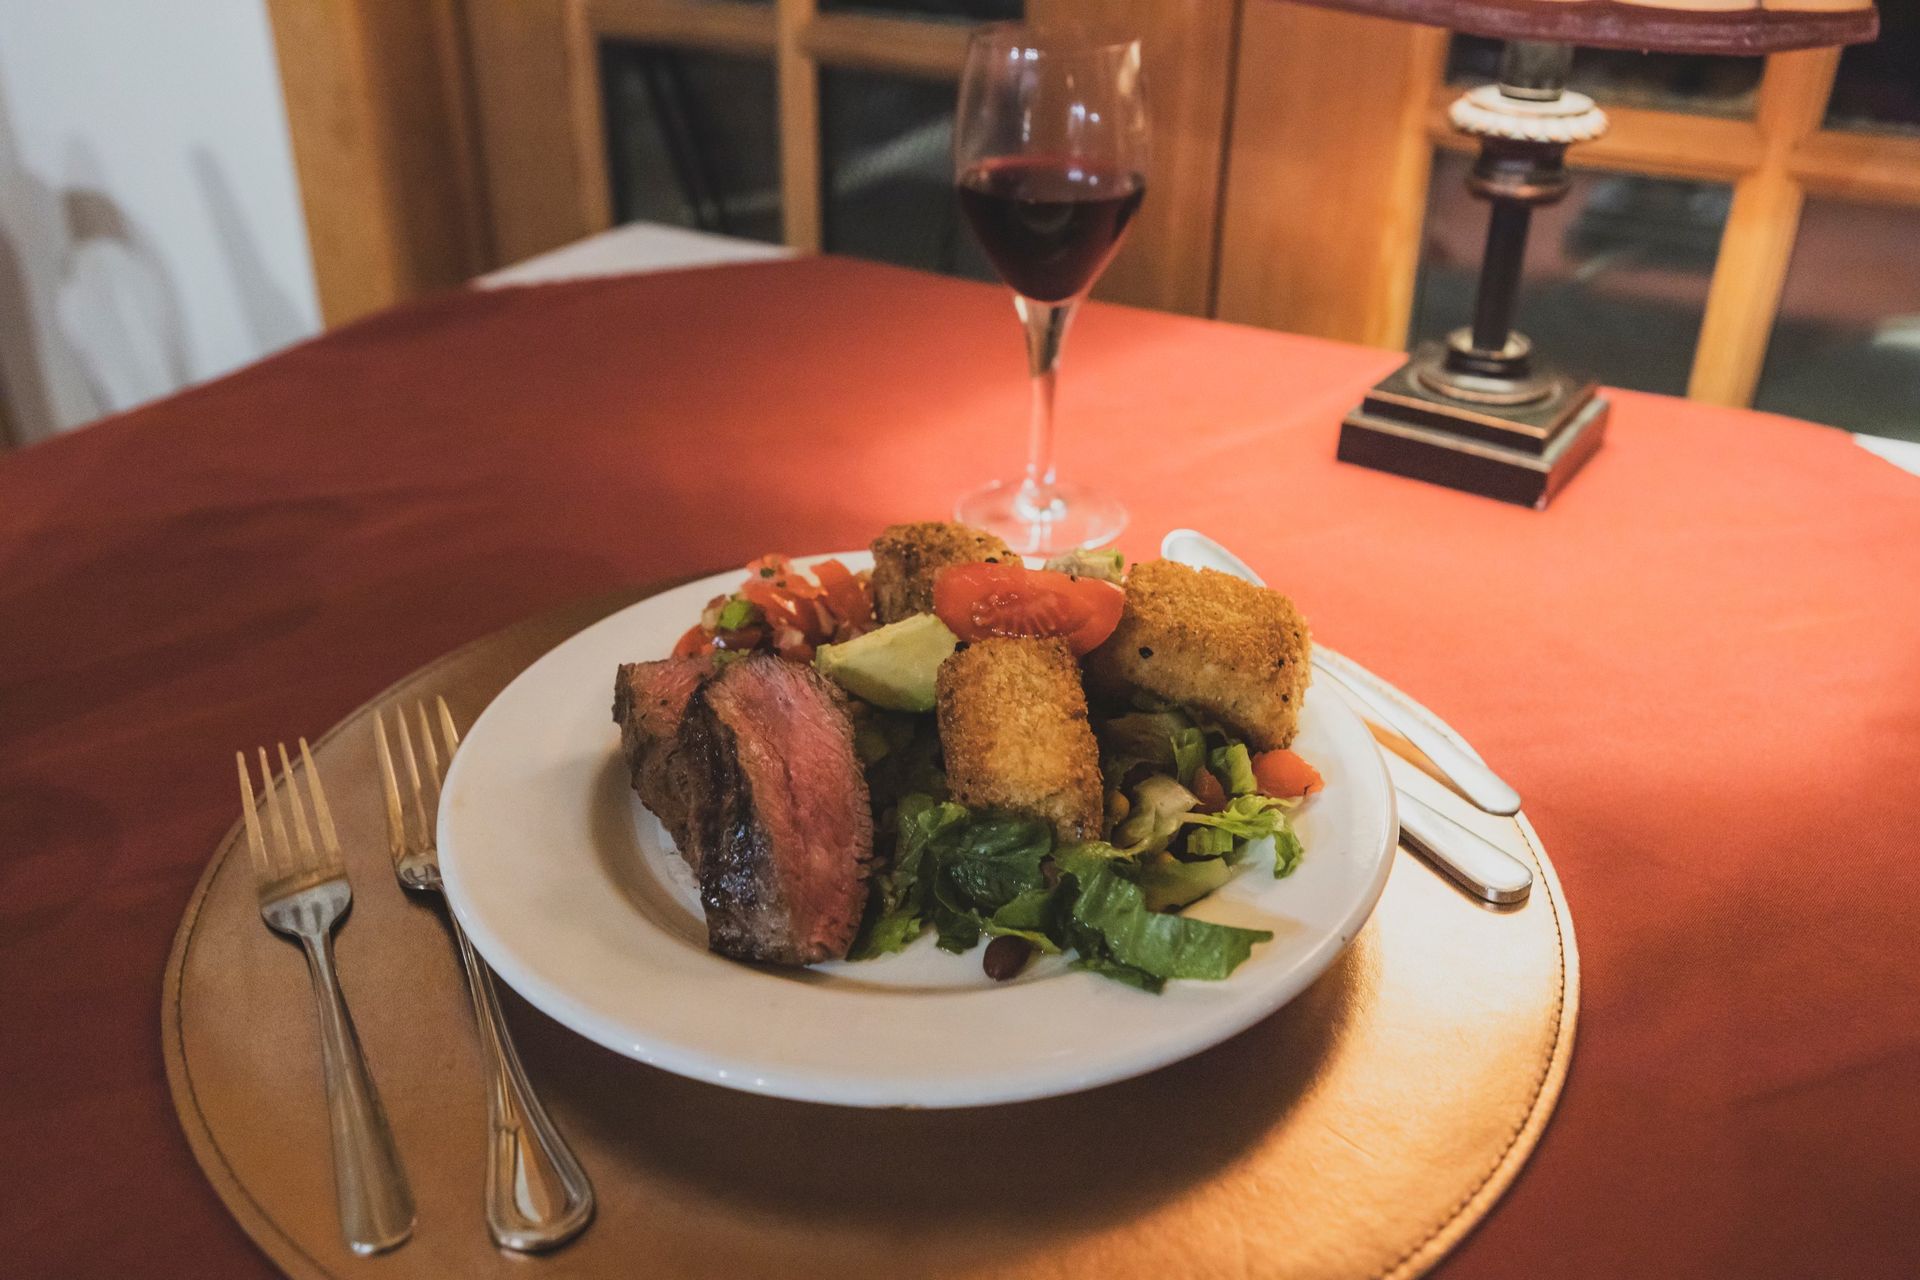 steak-and-salad-dinner-plate